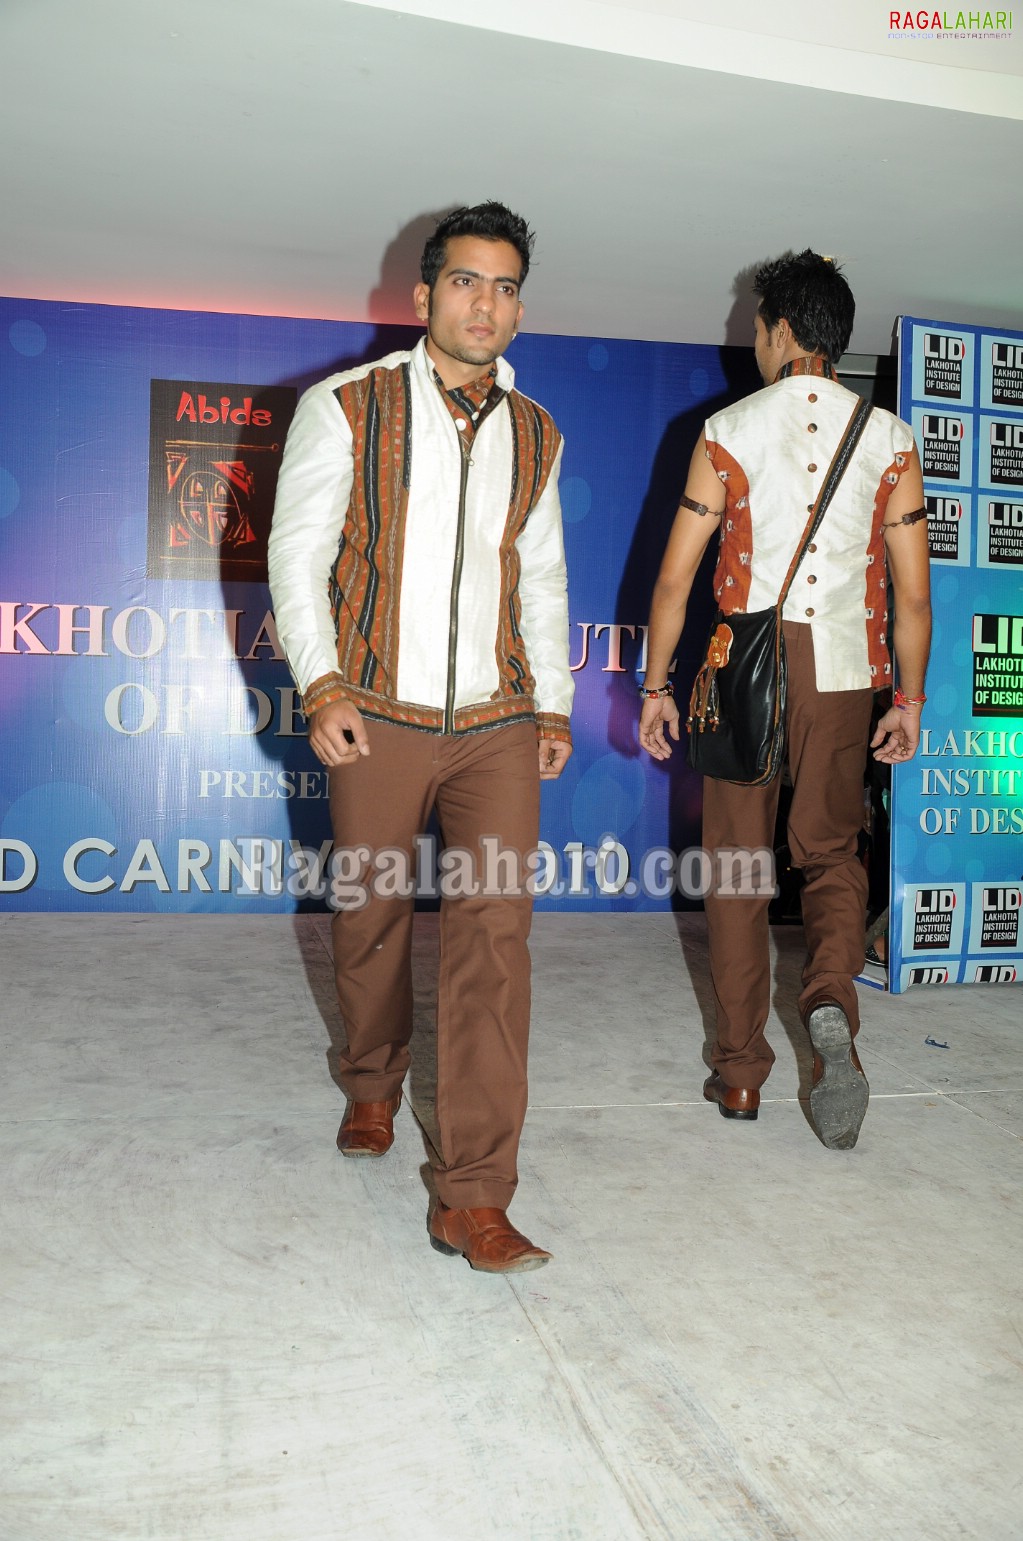 Lakhotia Institute of Design Fashion Show, LID Carnival 2010 